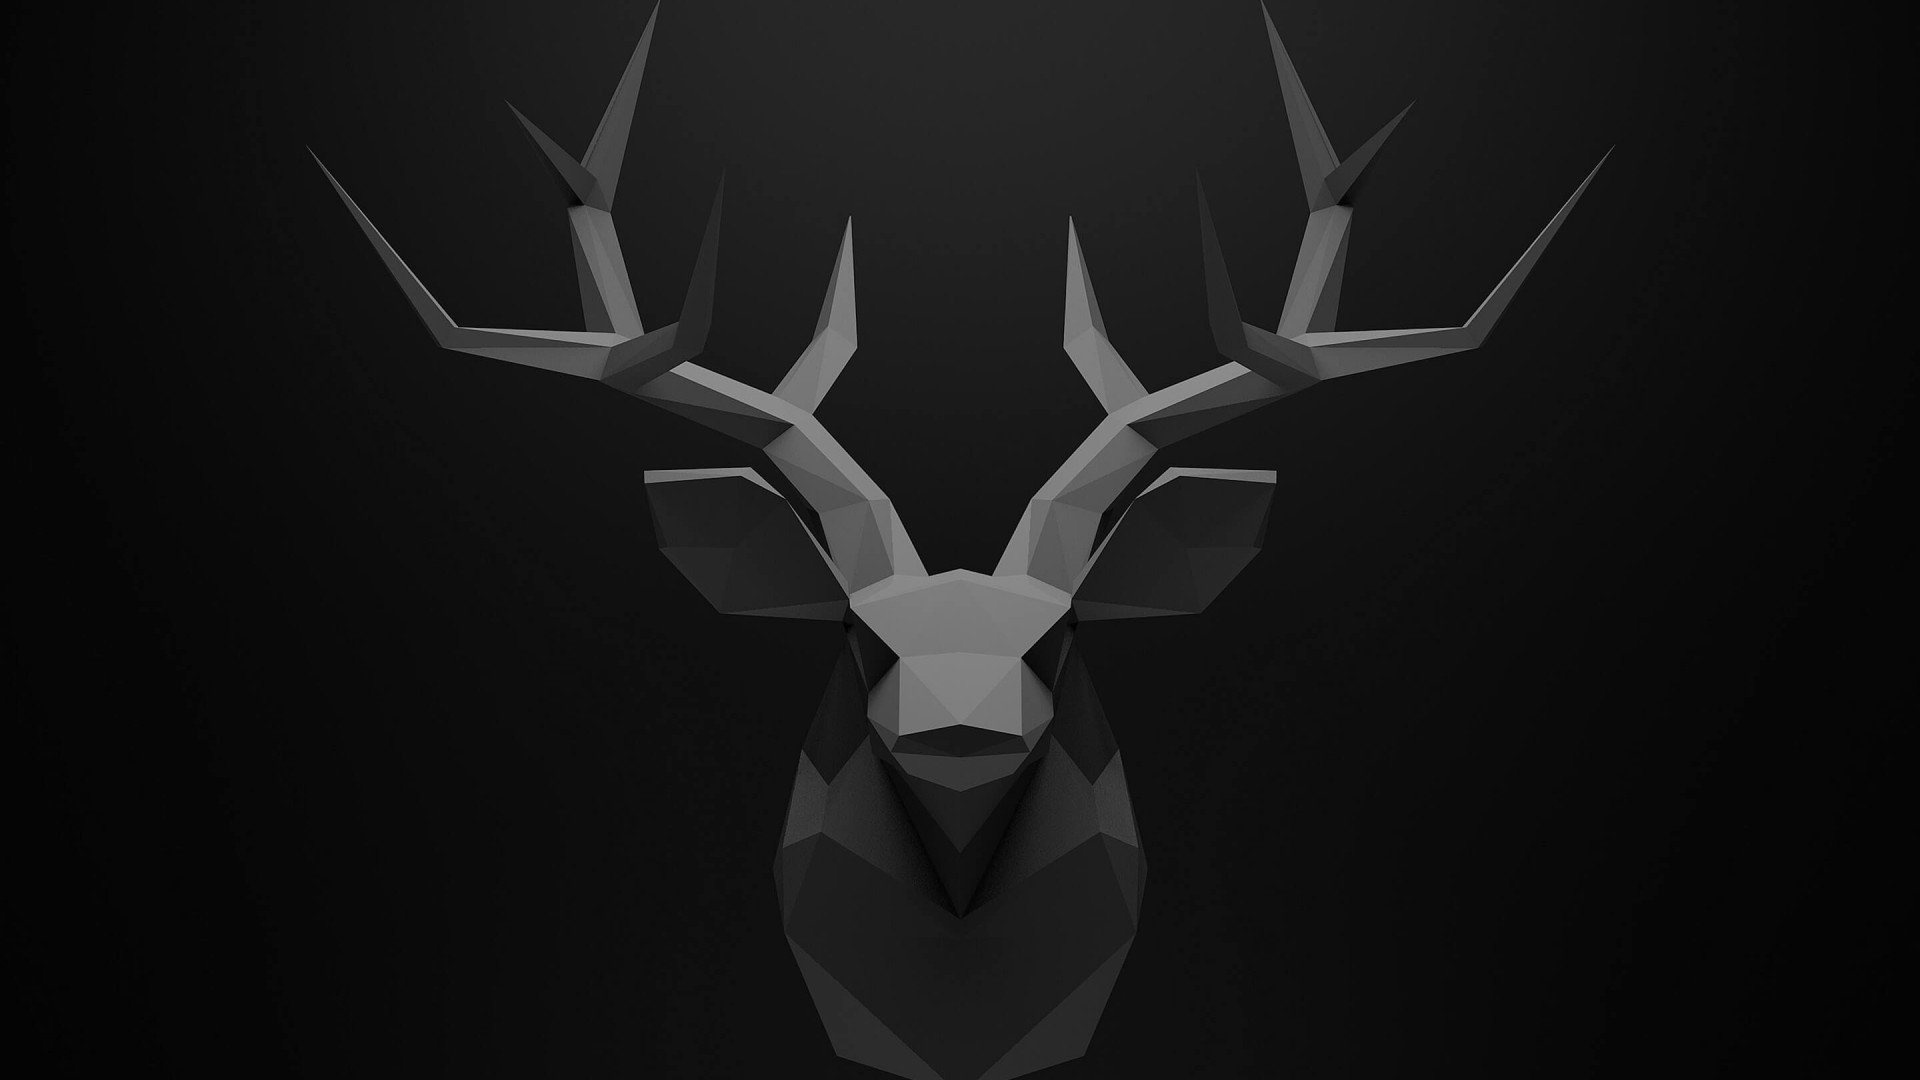 General 1920x1080 black gray digital art monochrome deer artwork